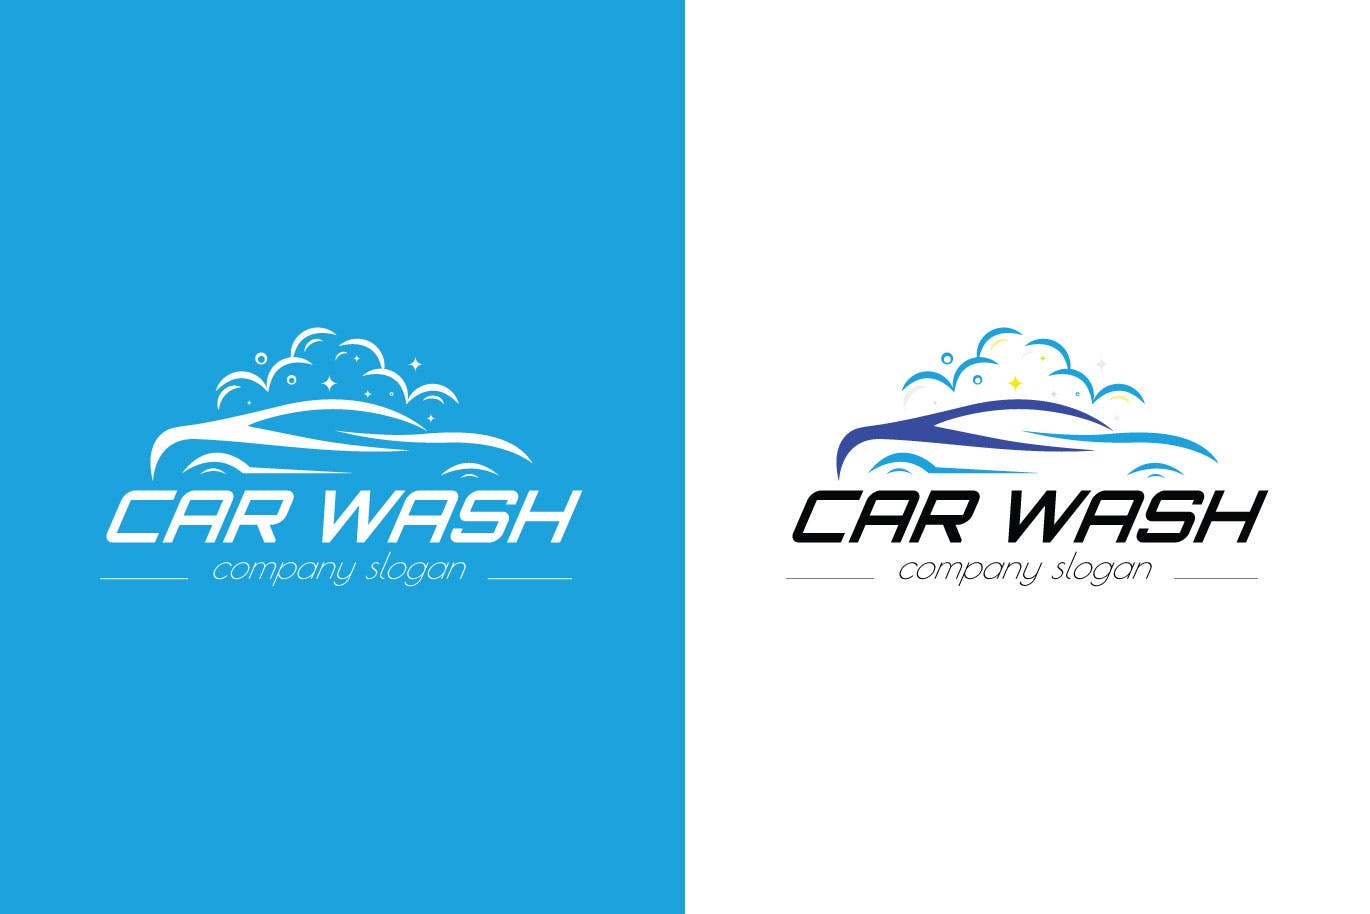 洗车店品牌Logo设计16图库精选模板 Car Wash Business Logo Template插图(1)